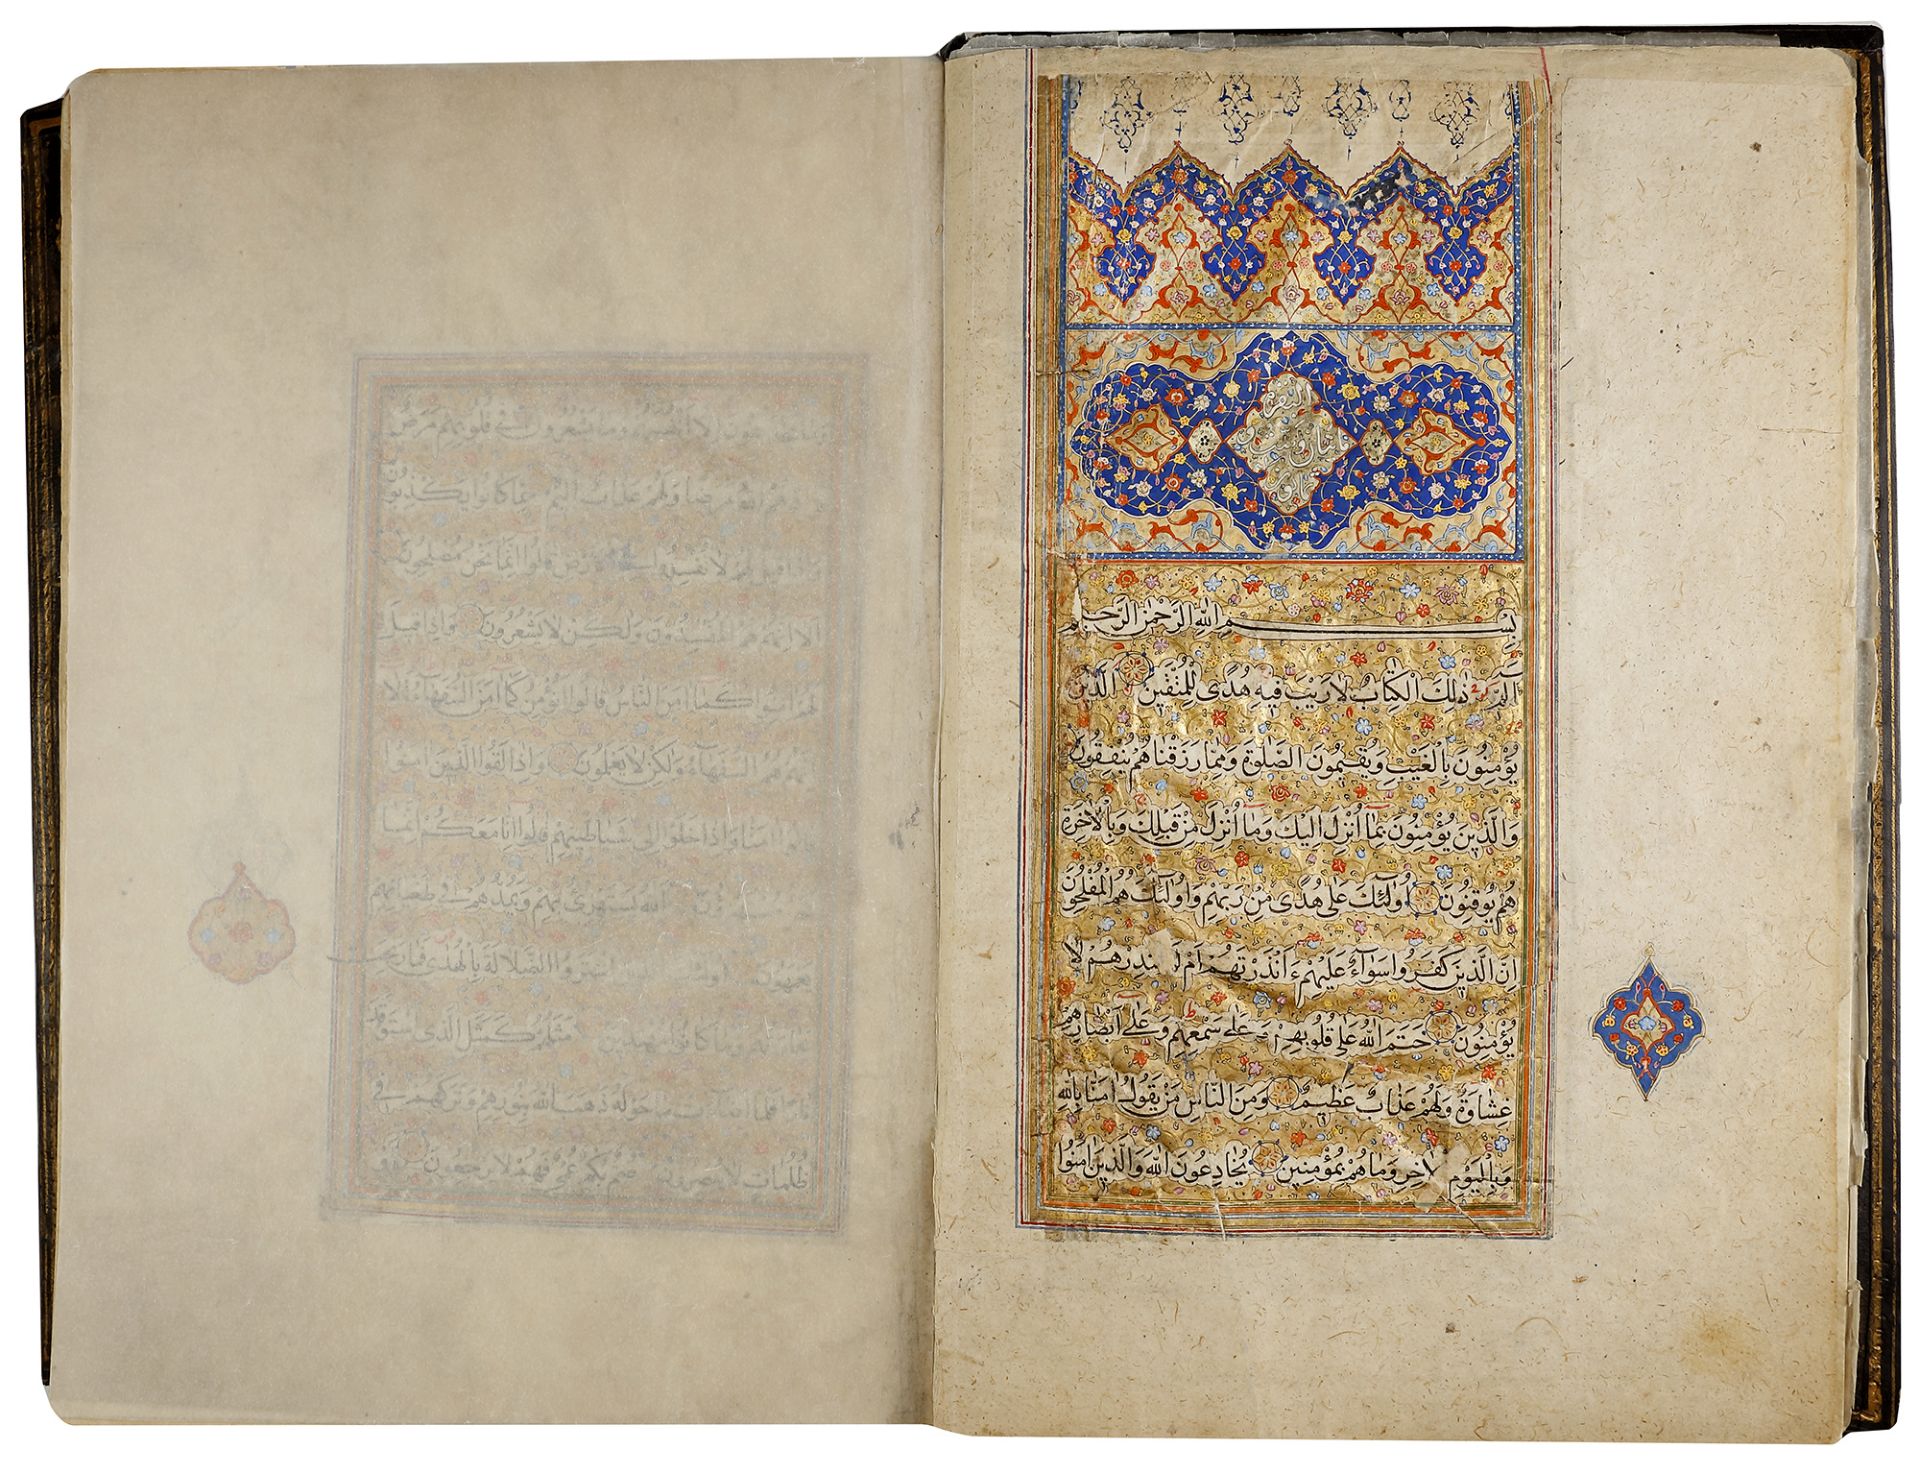 A LARGE ILLUMINATED QURAN, COPIED BY 'ALA'-AL-DIN MUHAMMAD AL-TABRIZI SAFAVID, PERSIA, 16TH CENT - Image 10 of 26